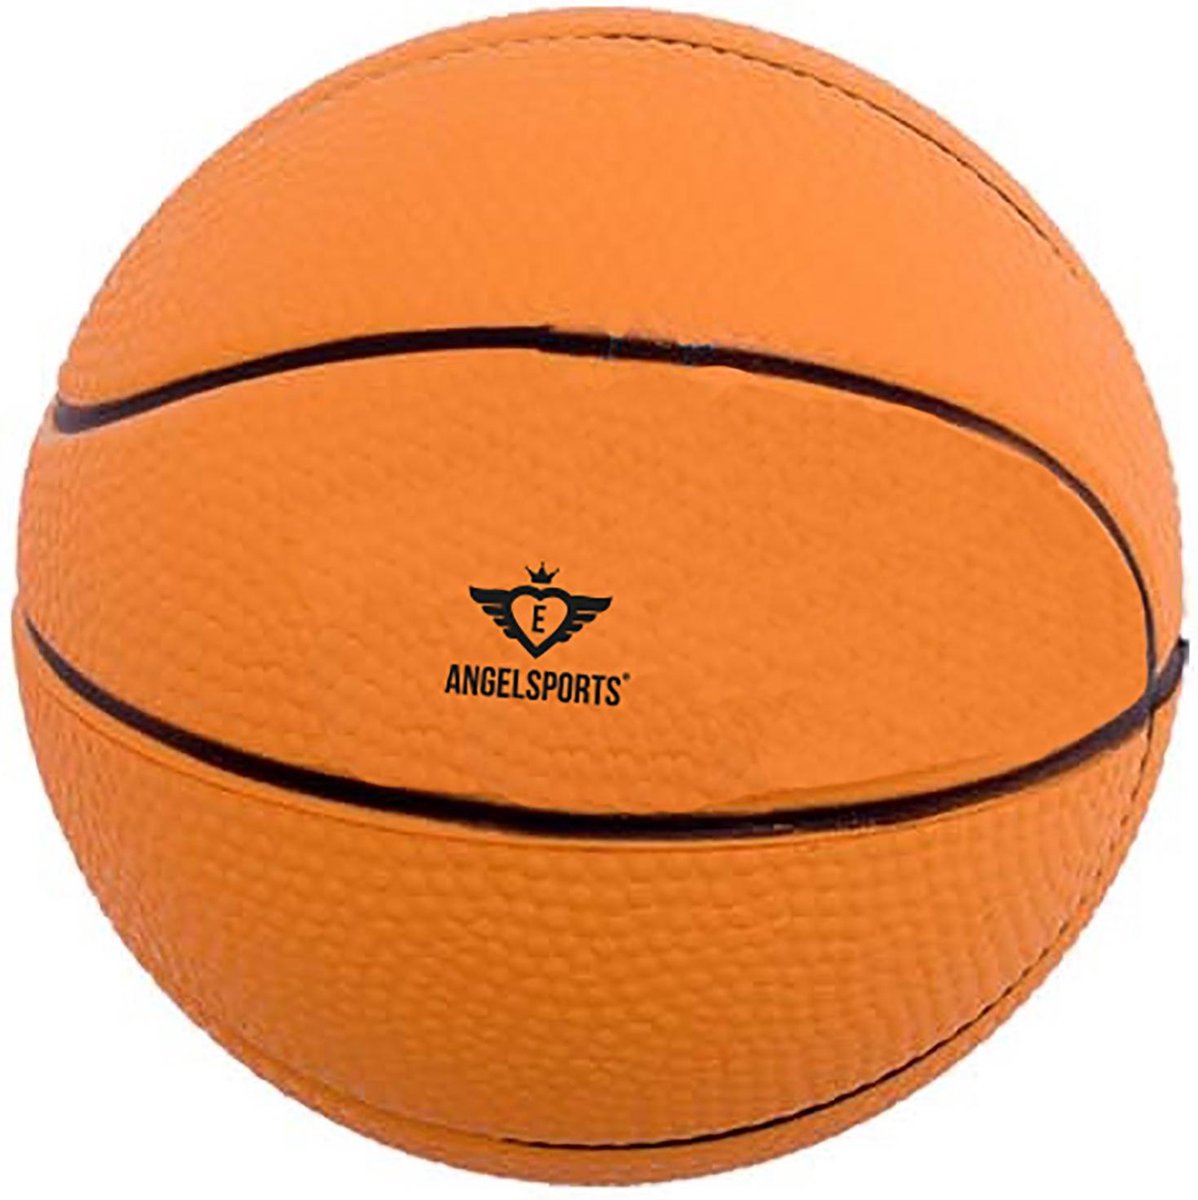 Basketbal - soft foam - 12,5 cm dia, in net met headercard, kleur oranje